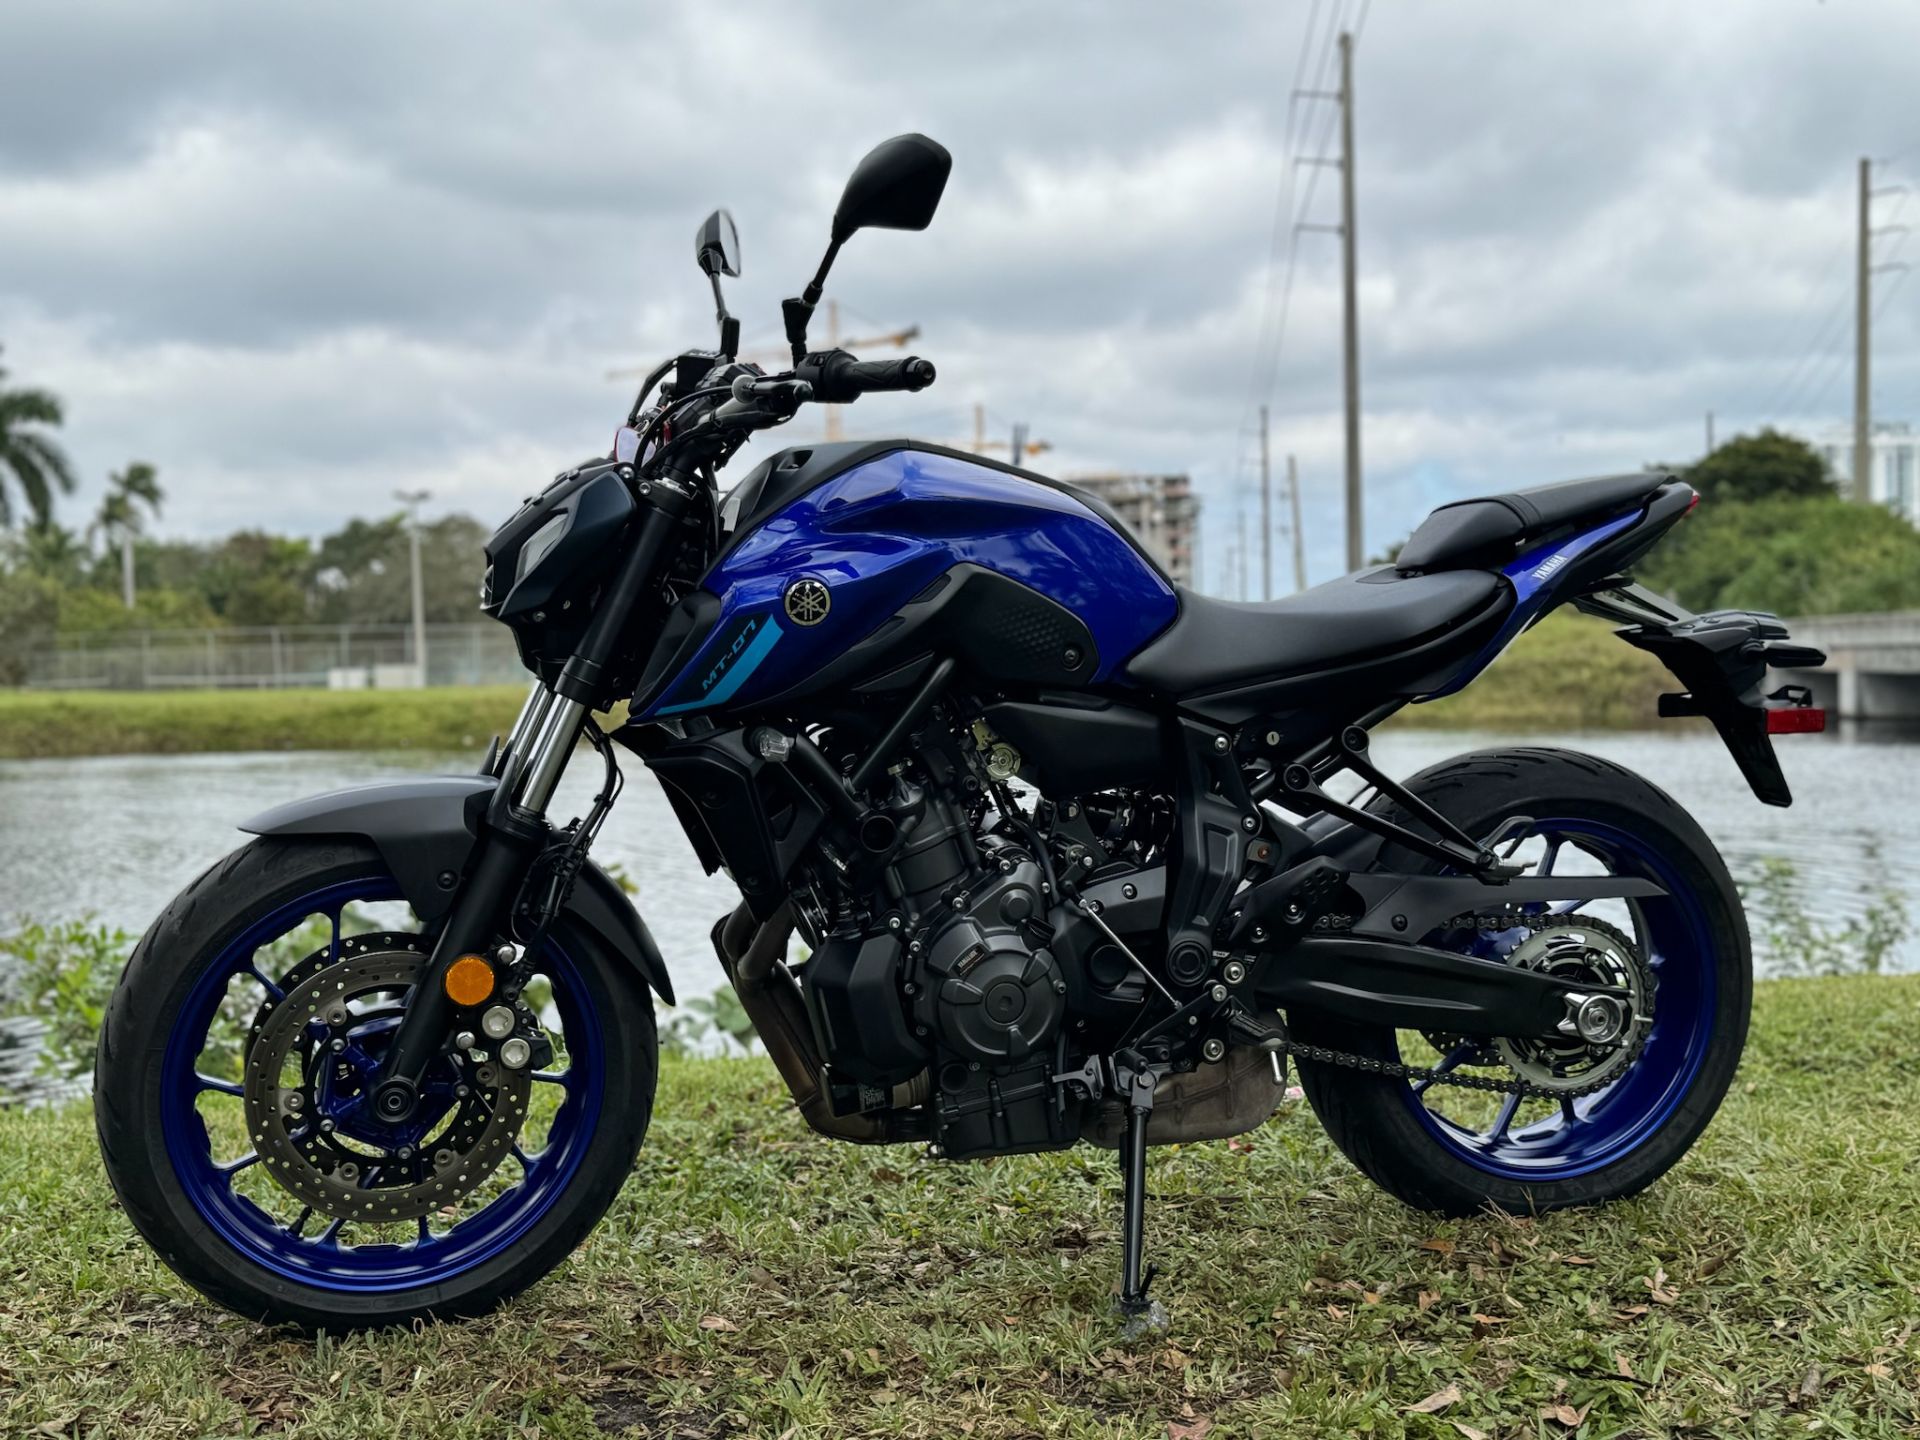 2022 Yamaha MT-07 in North Miami Beach, Florida - Photo 12